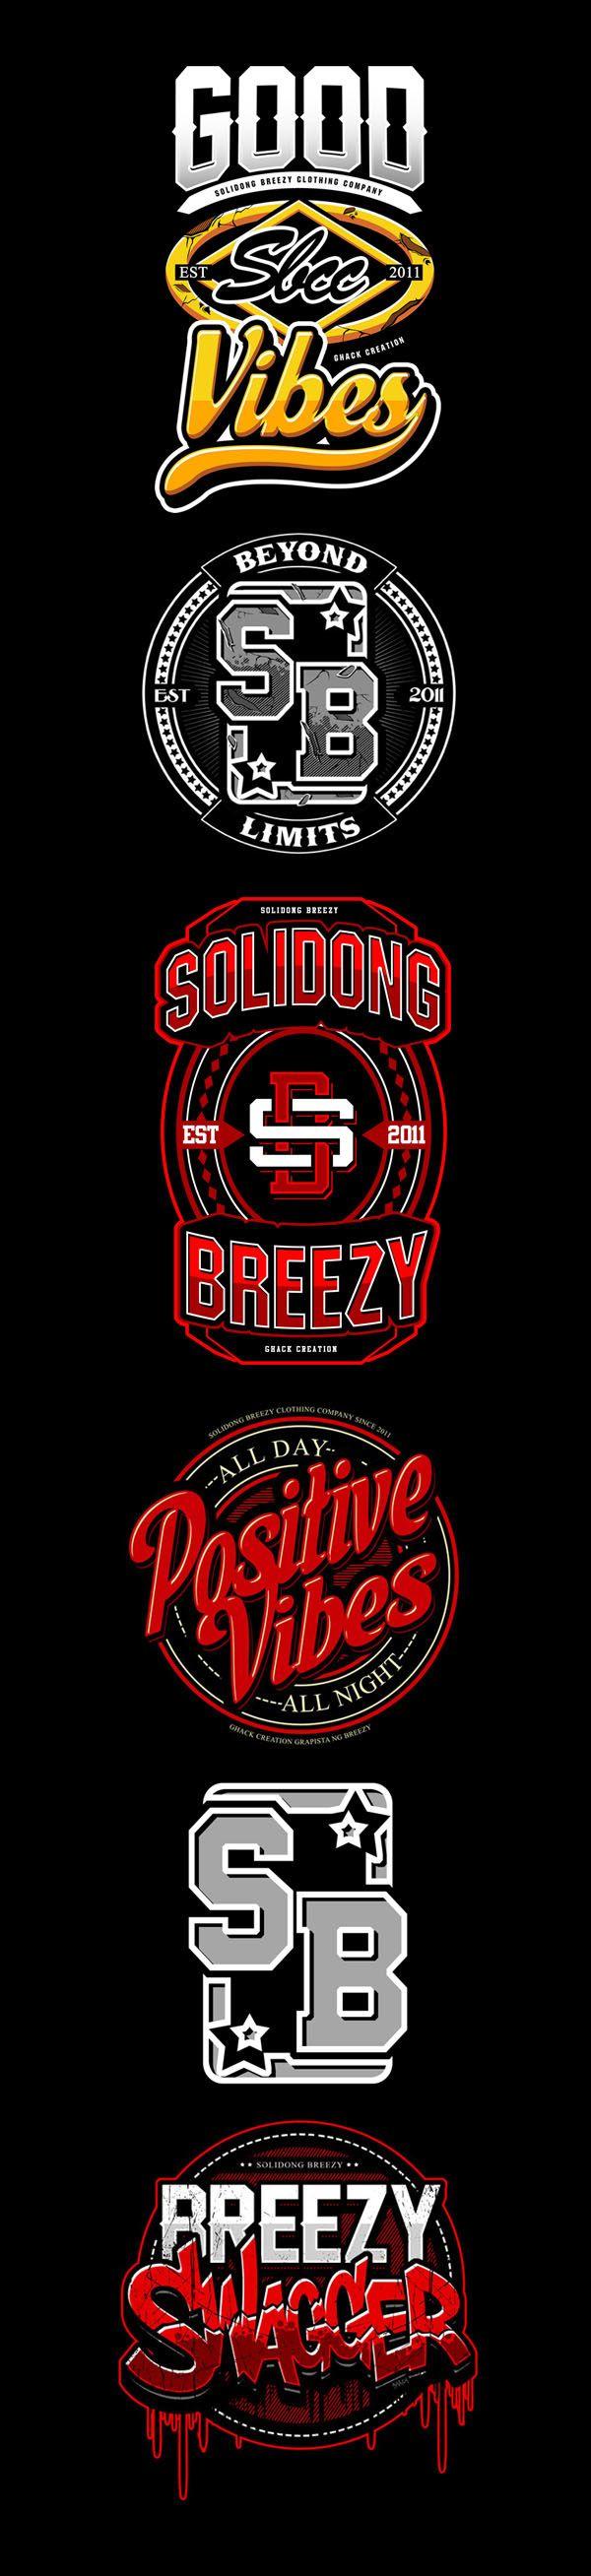 Breezy Logo - Solidong Breezy Logo 2013 on Behance